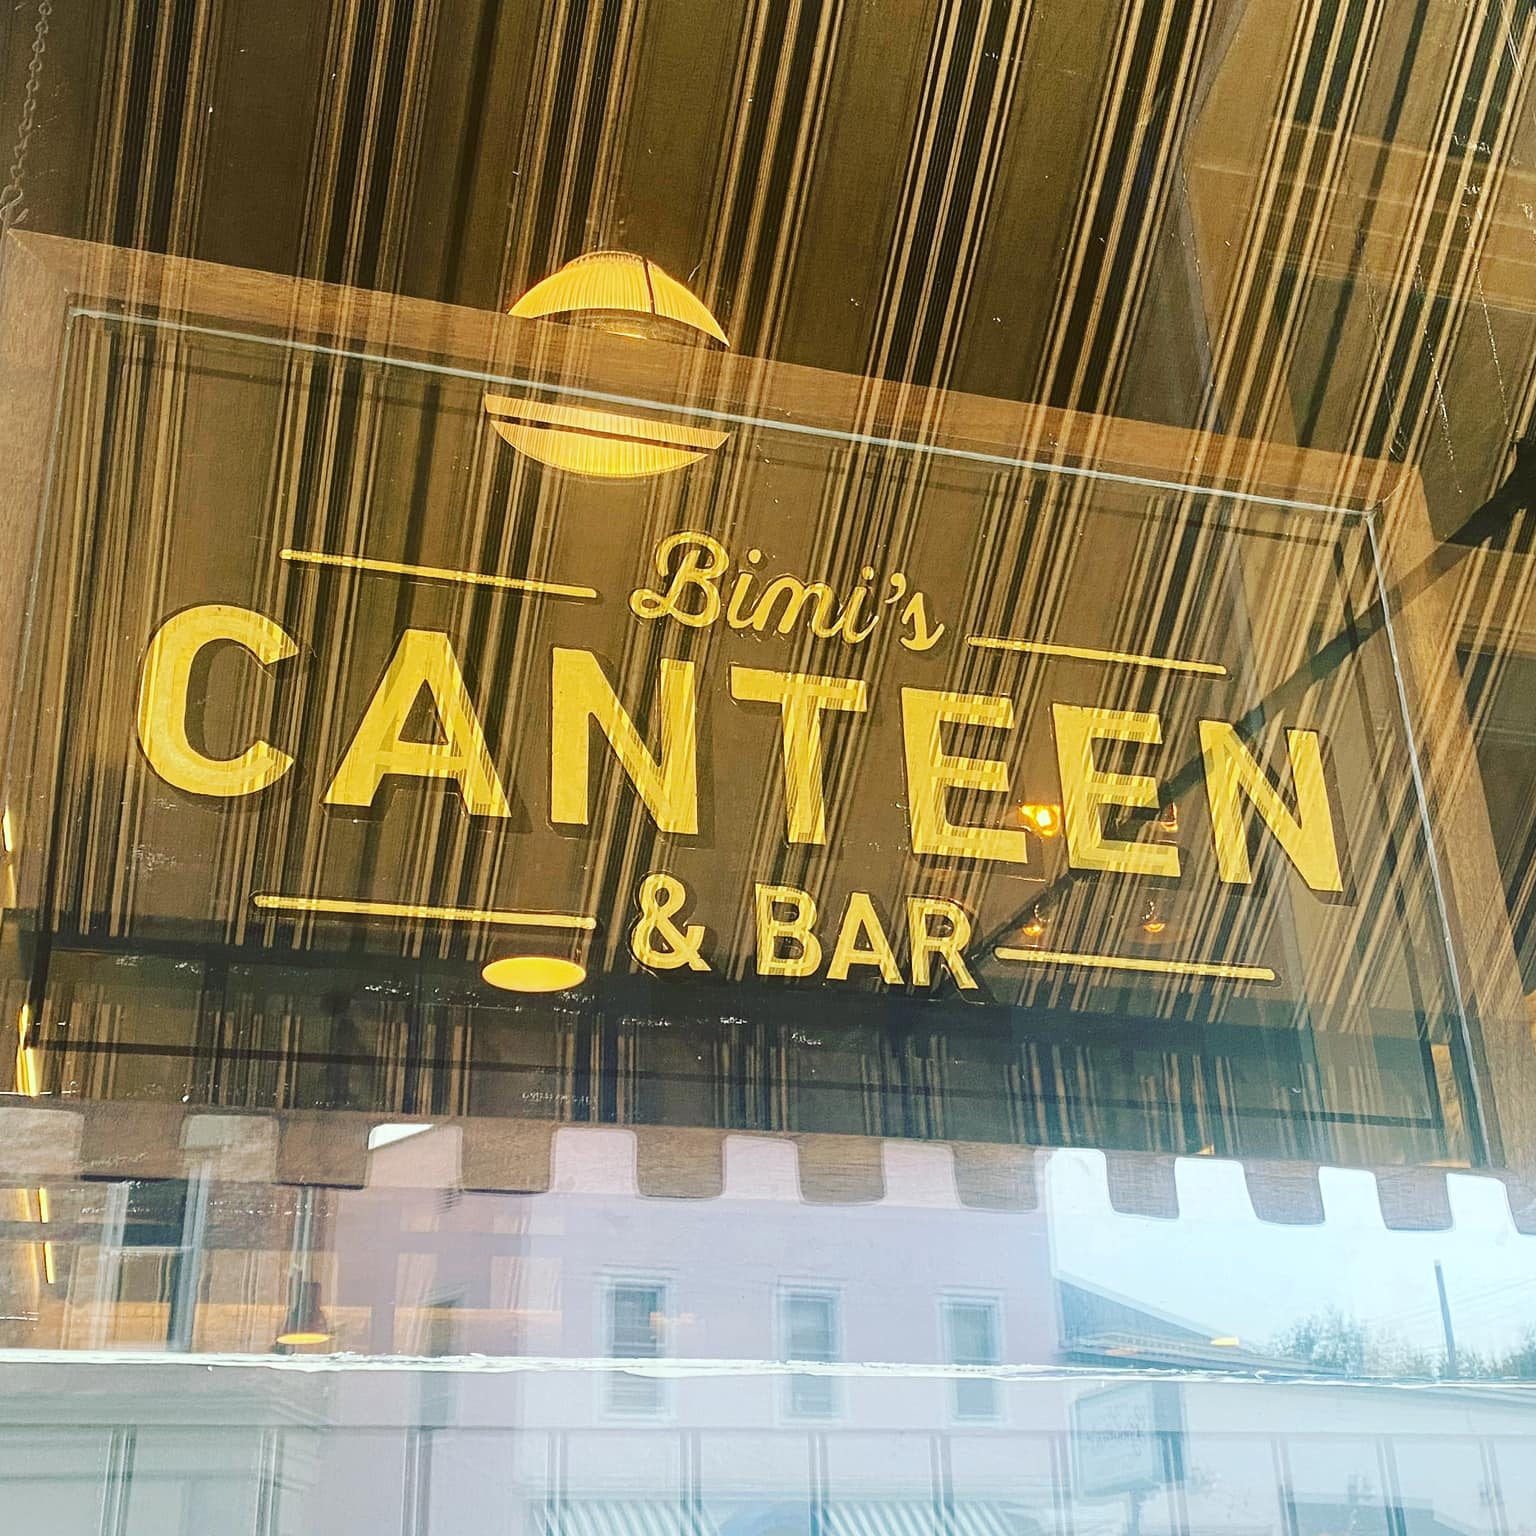 Sign reading "Bimi's Canteen & Bar", Chatham, Columbia County